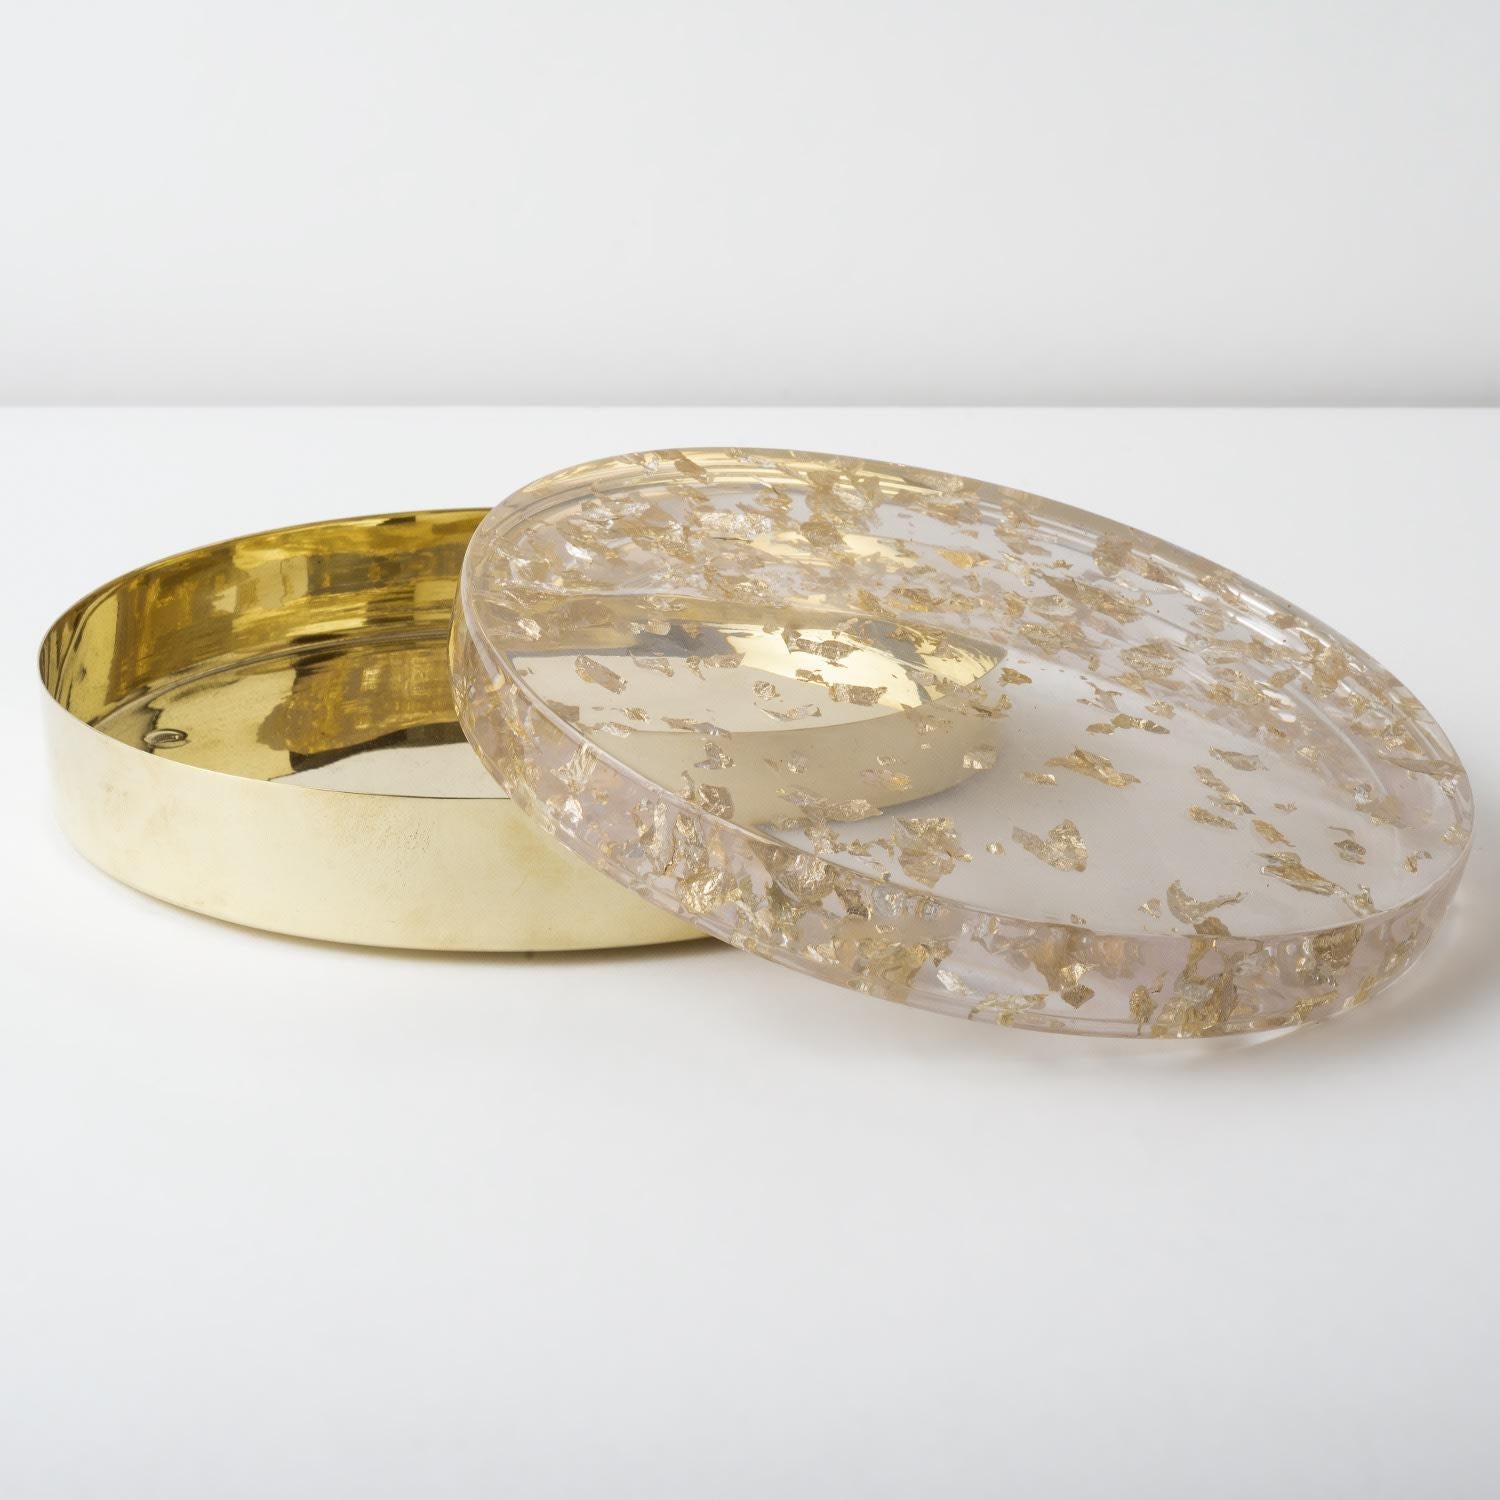 Laiton Dorado Brass & Gold Leaf In Resin Decorative Large & Small Box Set